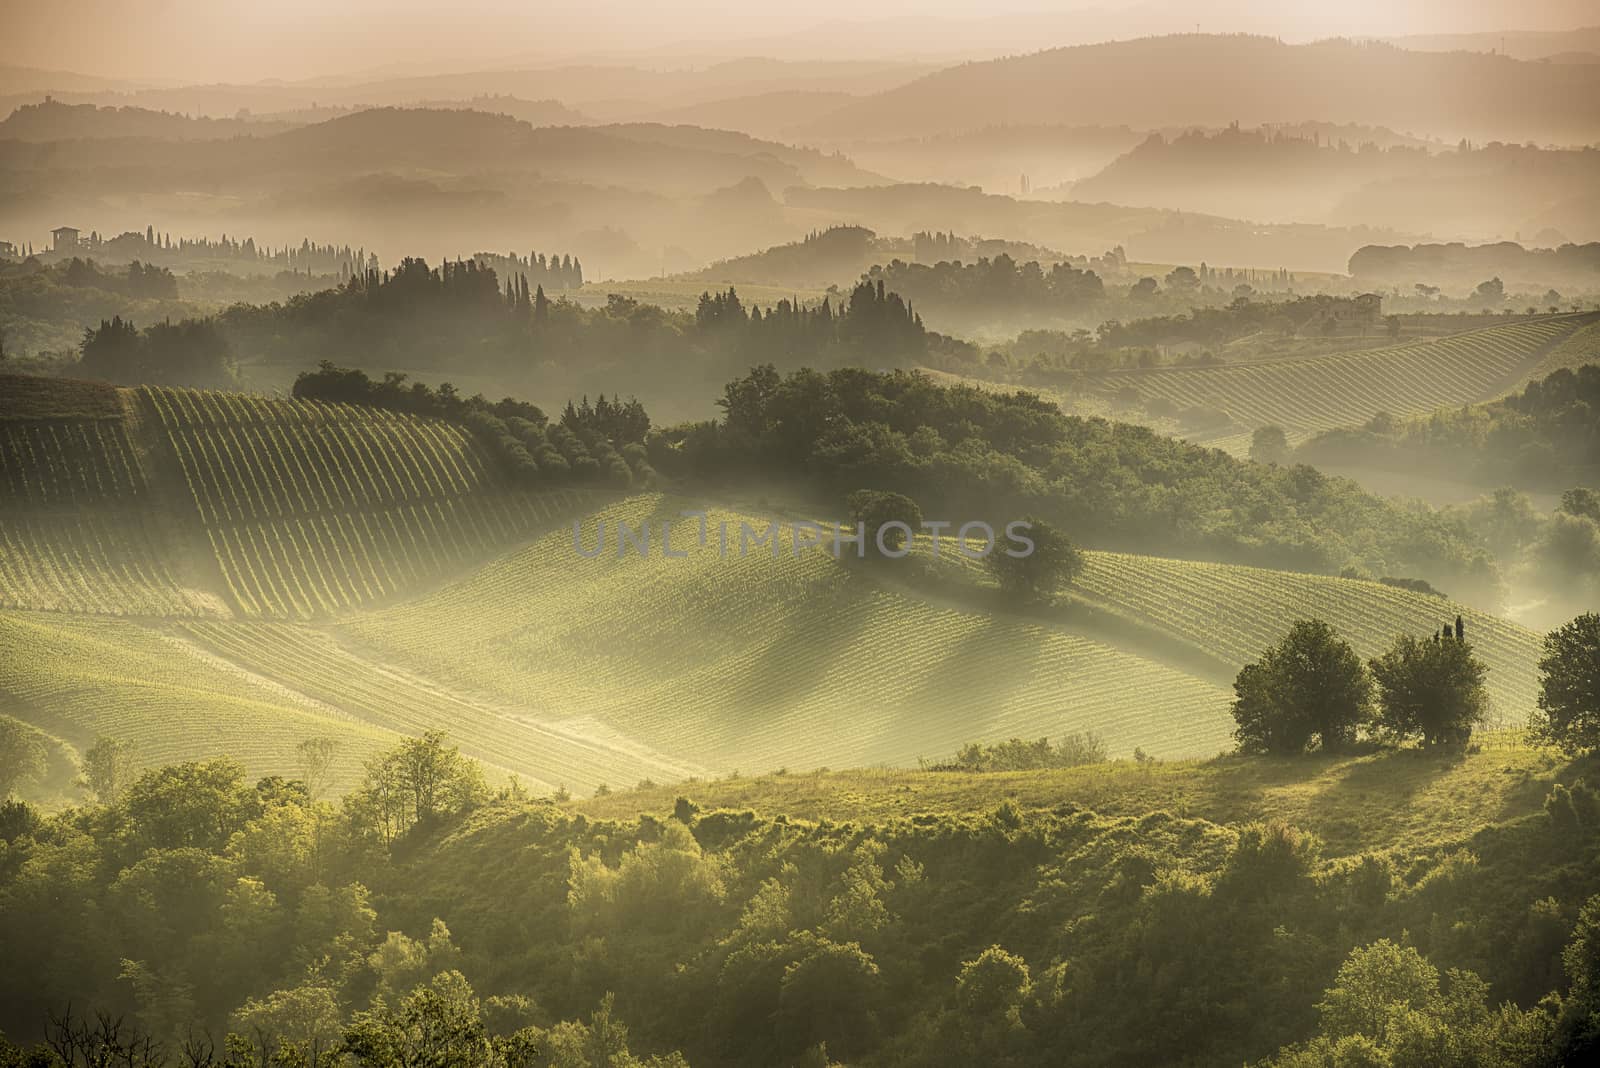 A brautiful misty sun rise over the tuscan hills around San Gimignano